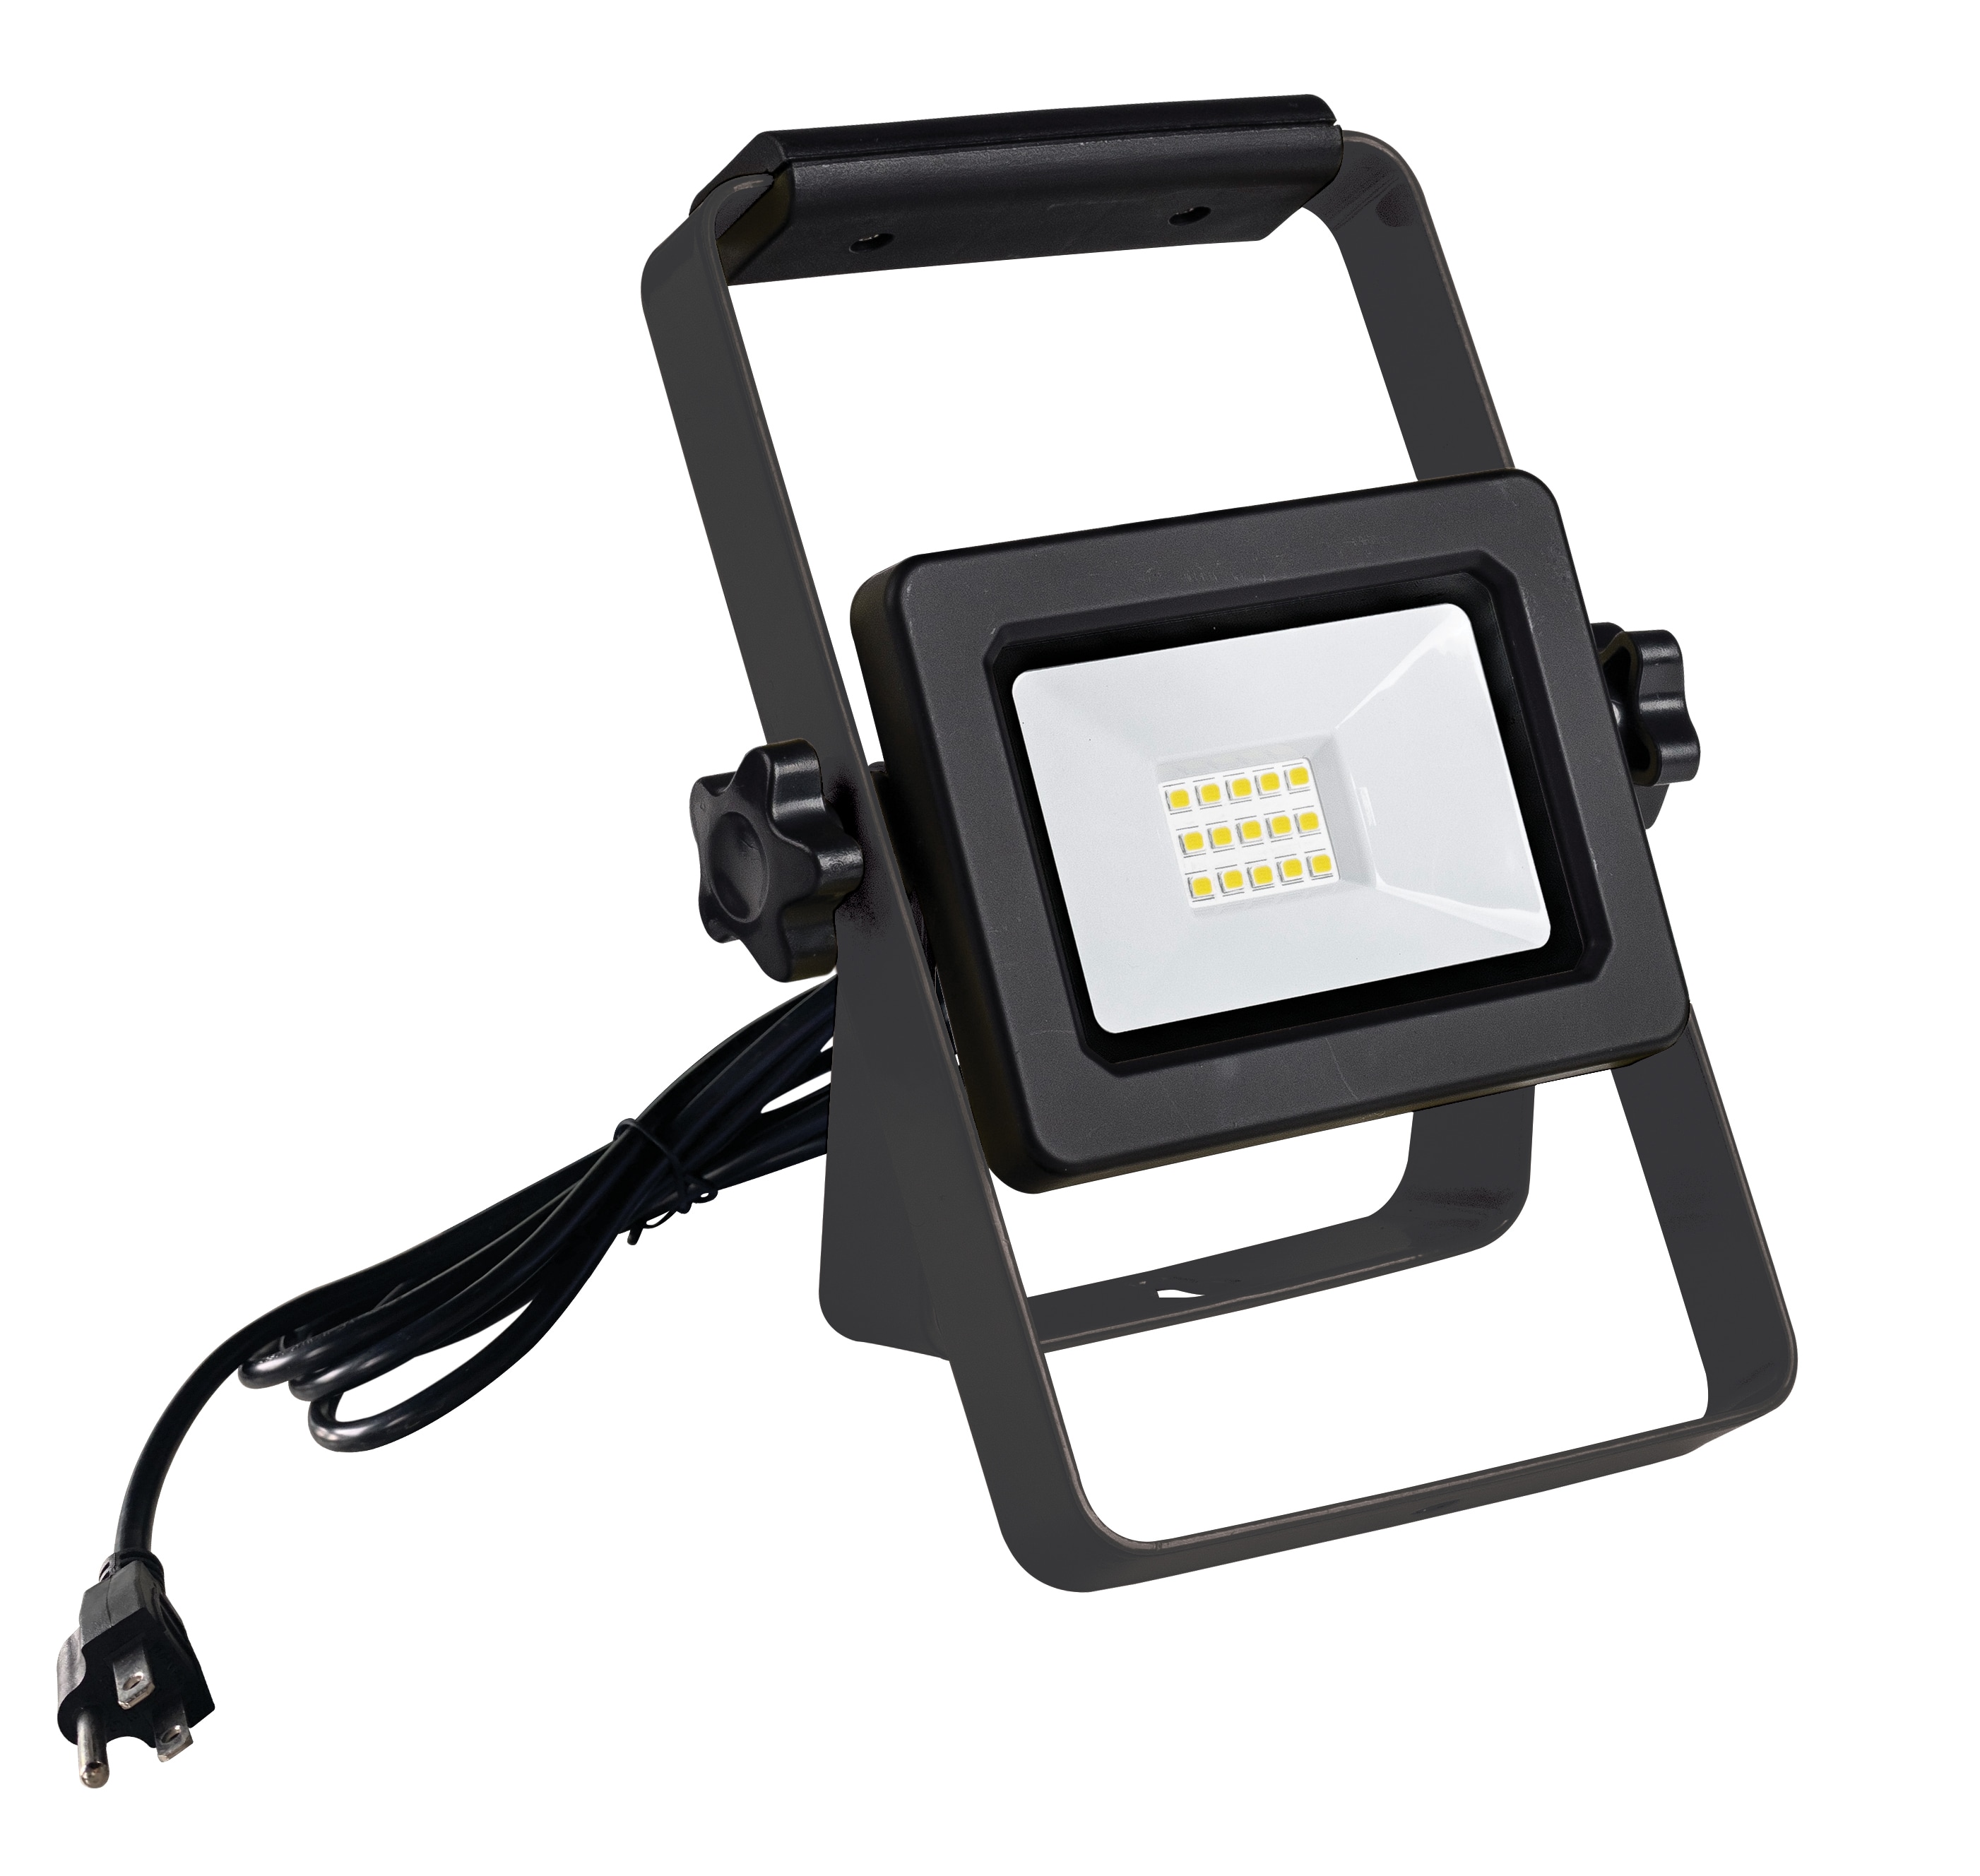 Portable LED Work Light with Tripod - 2 x 20W